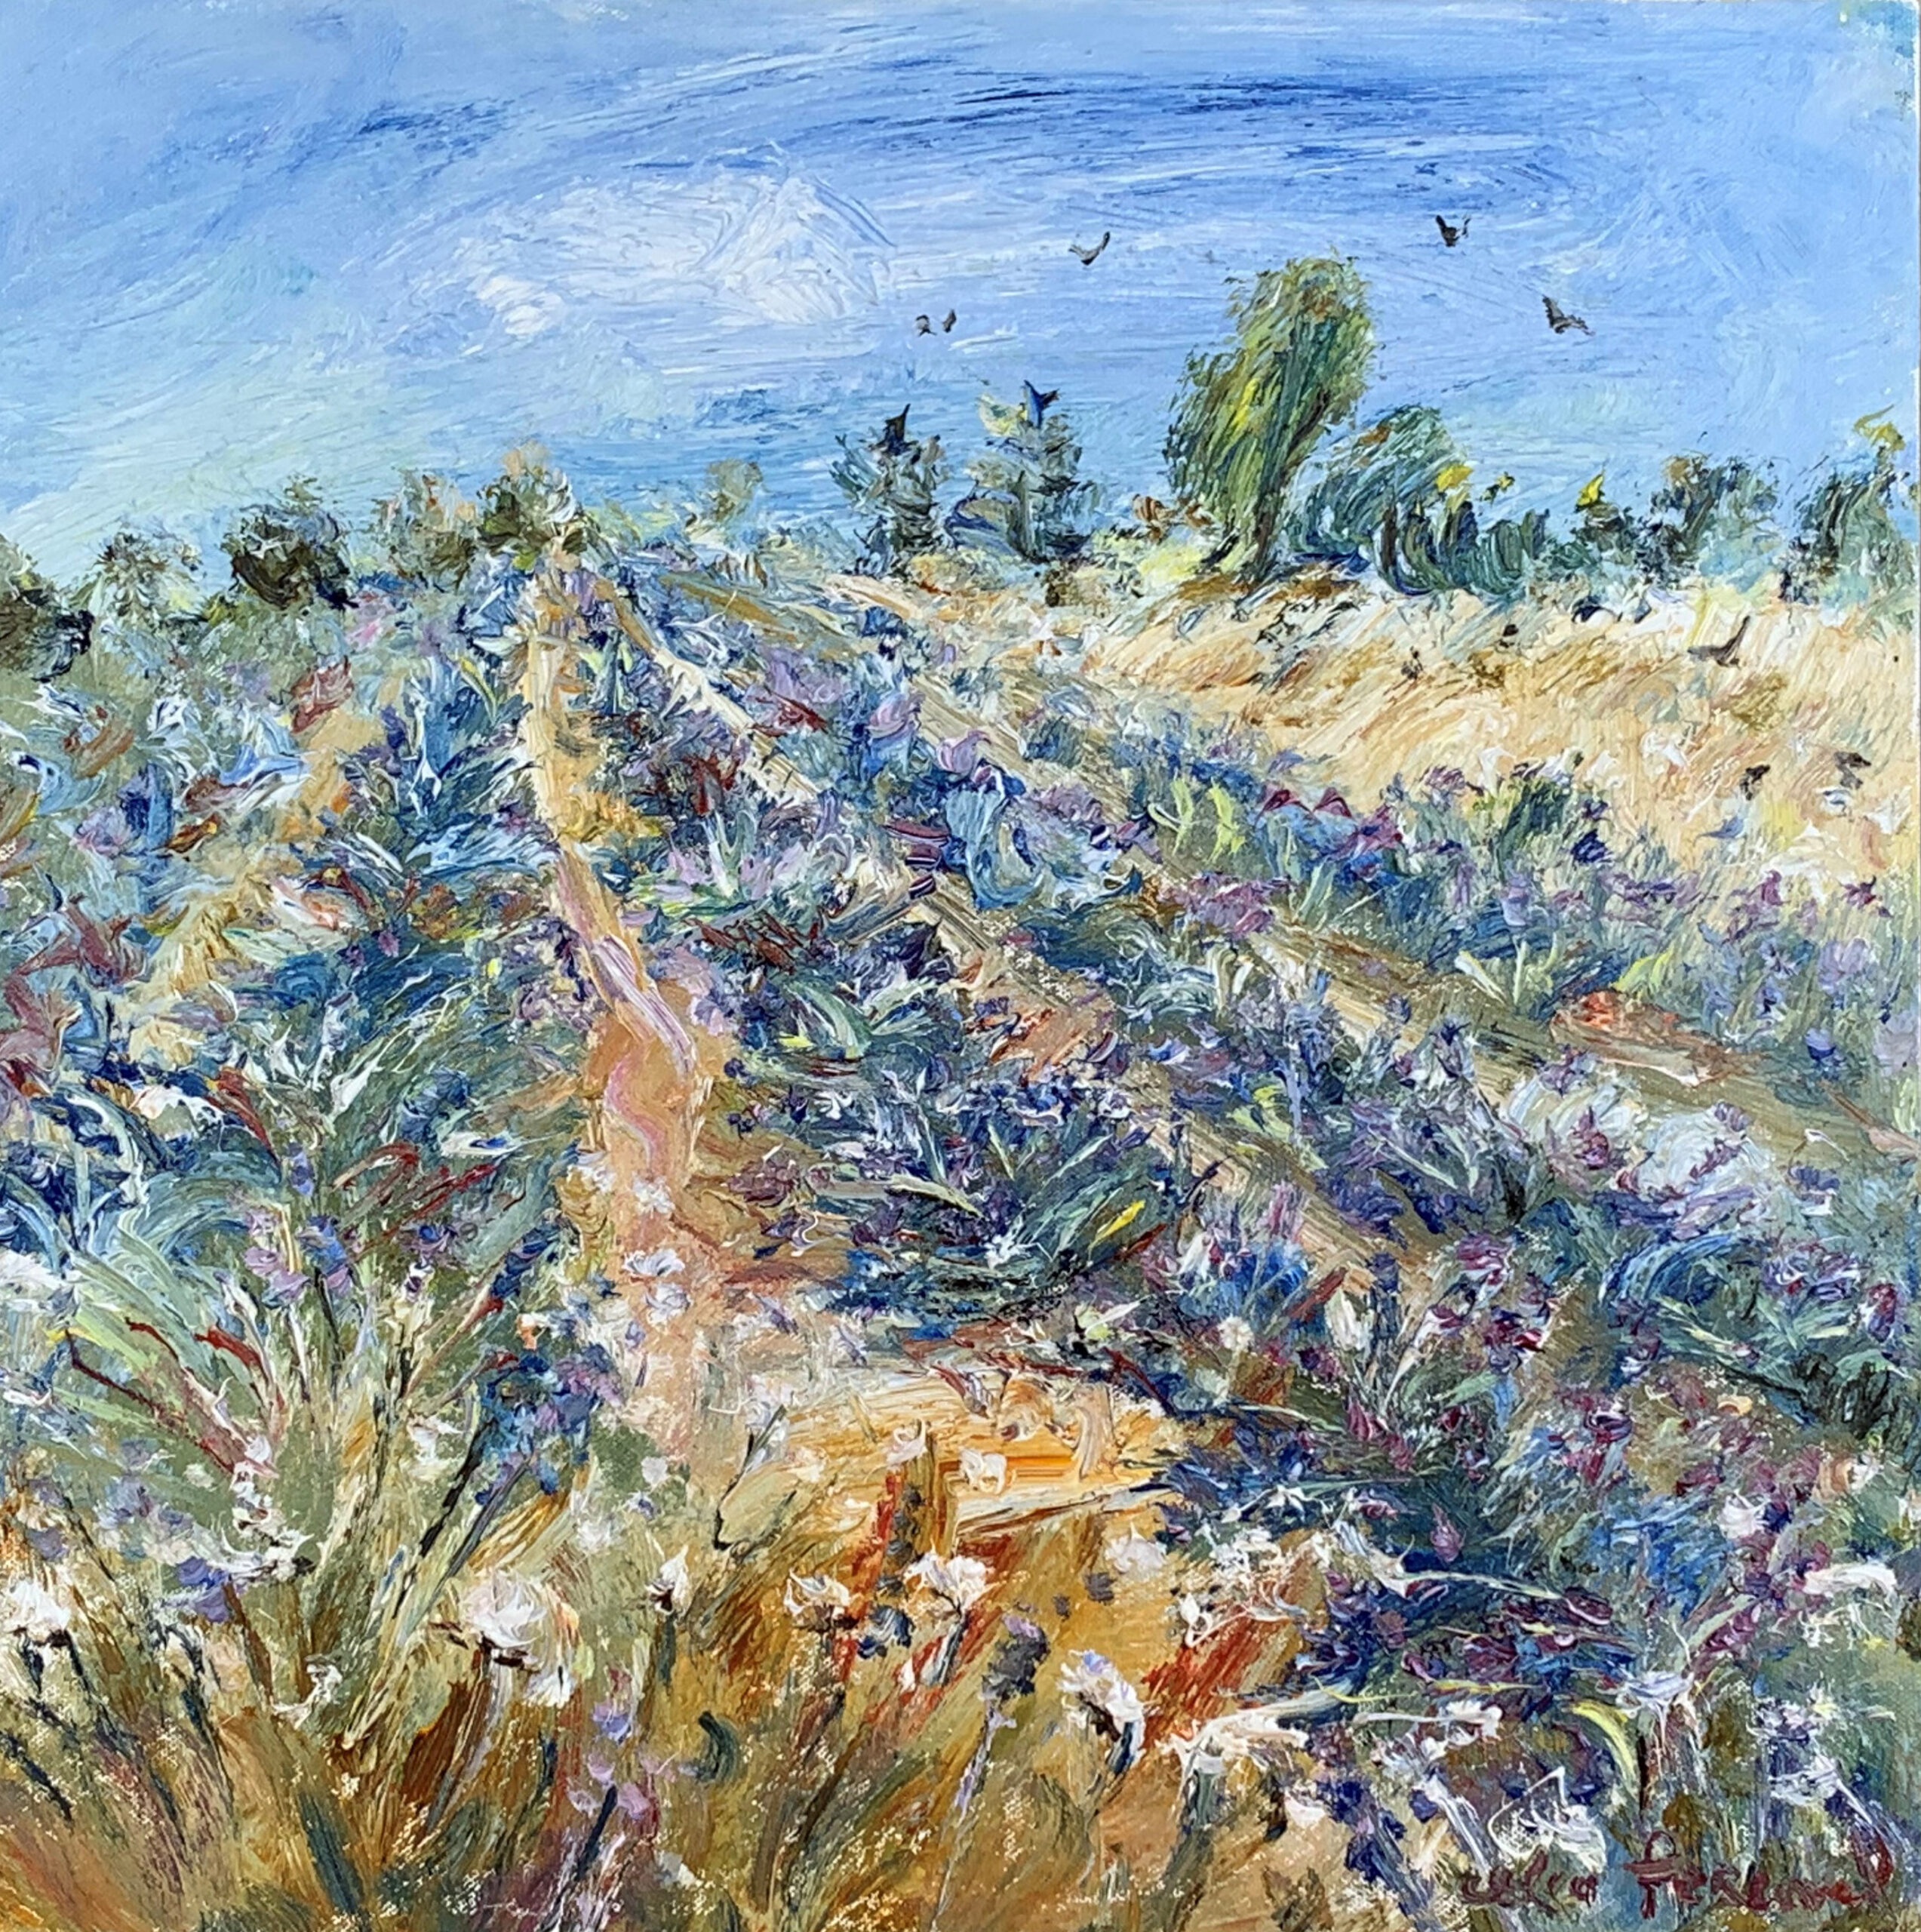 Celia Perceval 'Lavender Fields Above Castellane, France' oil on canvas 40 x 40cm $4,900